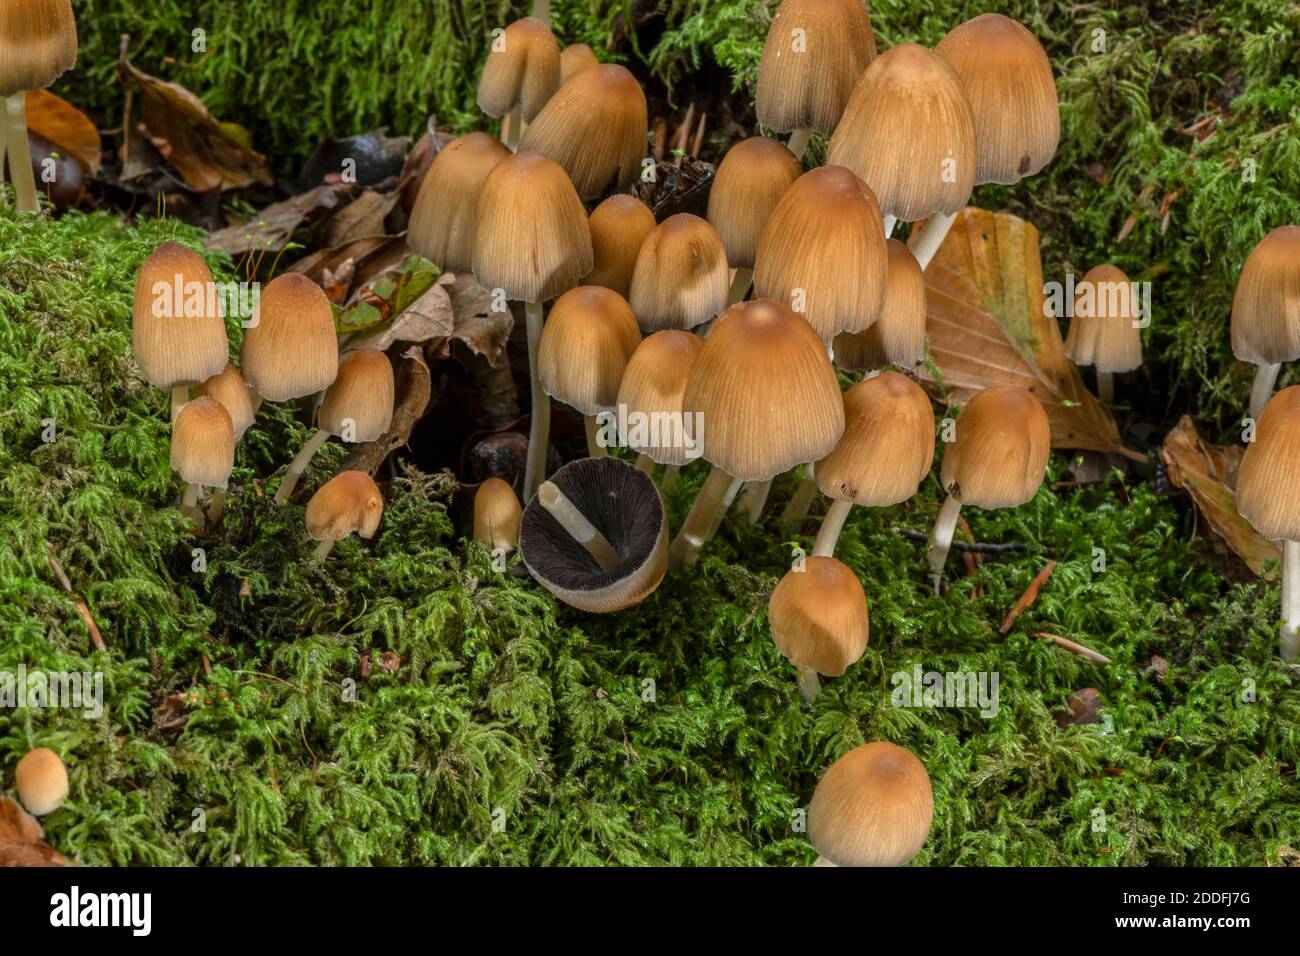 Glistening inkcap, Coprinellus micaceus, cluster on old beech stump. Stock Photo